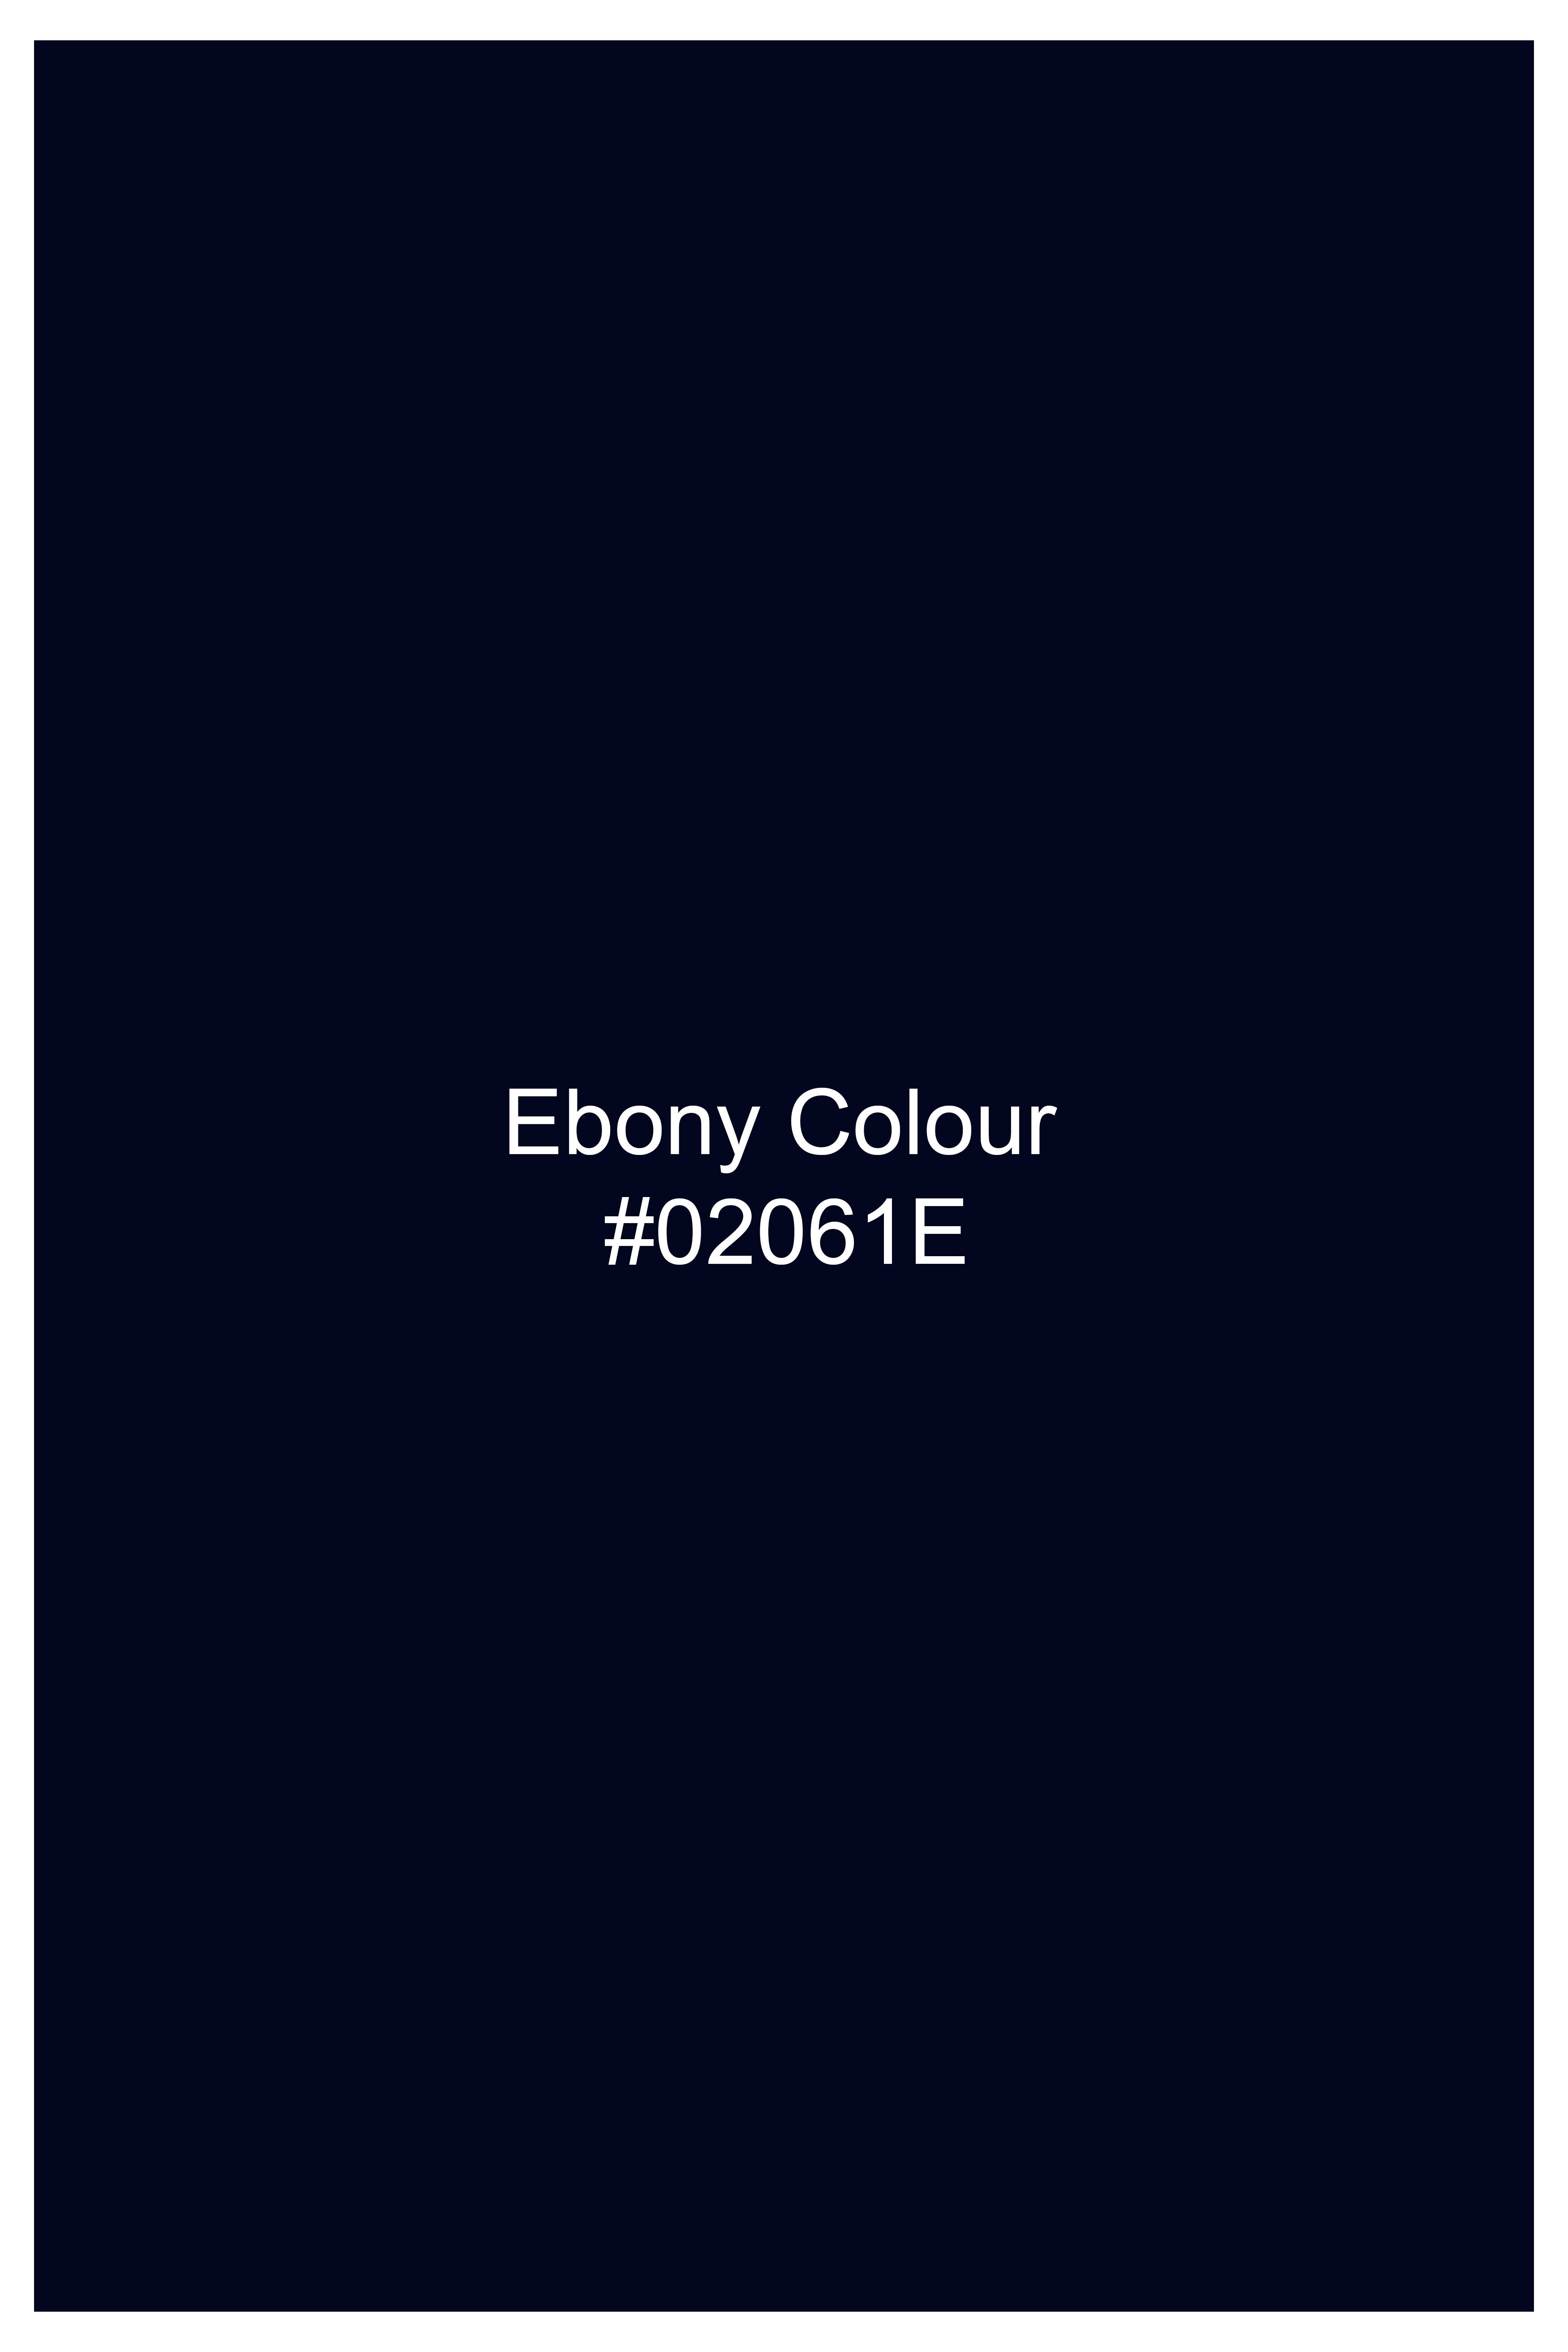 Ebony Blue Crushed Velvet Tuxedo Blazer